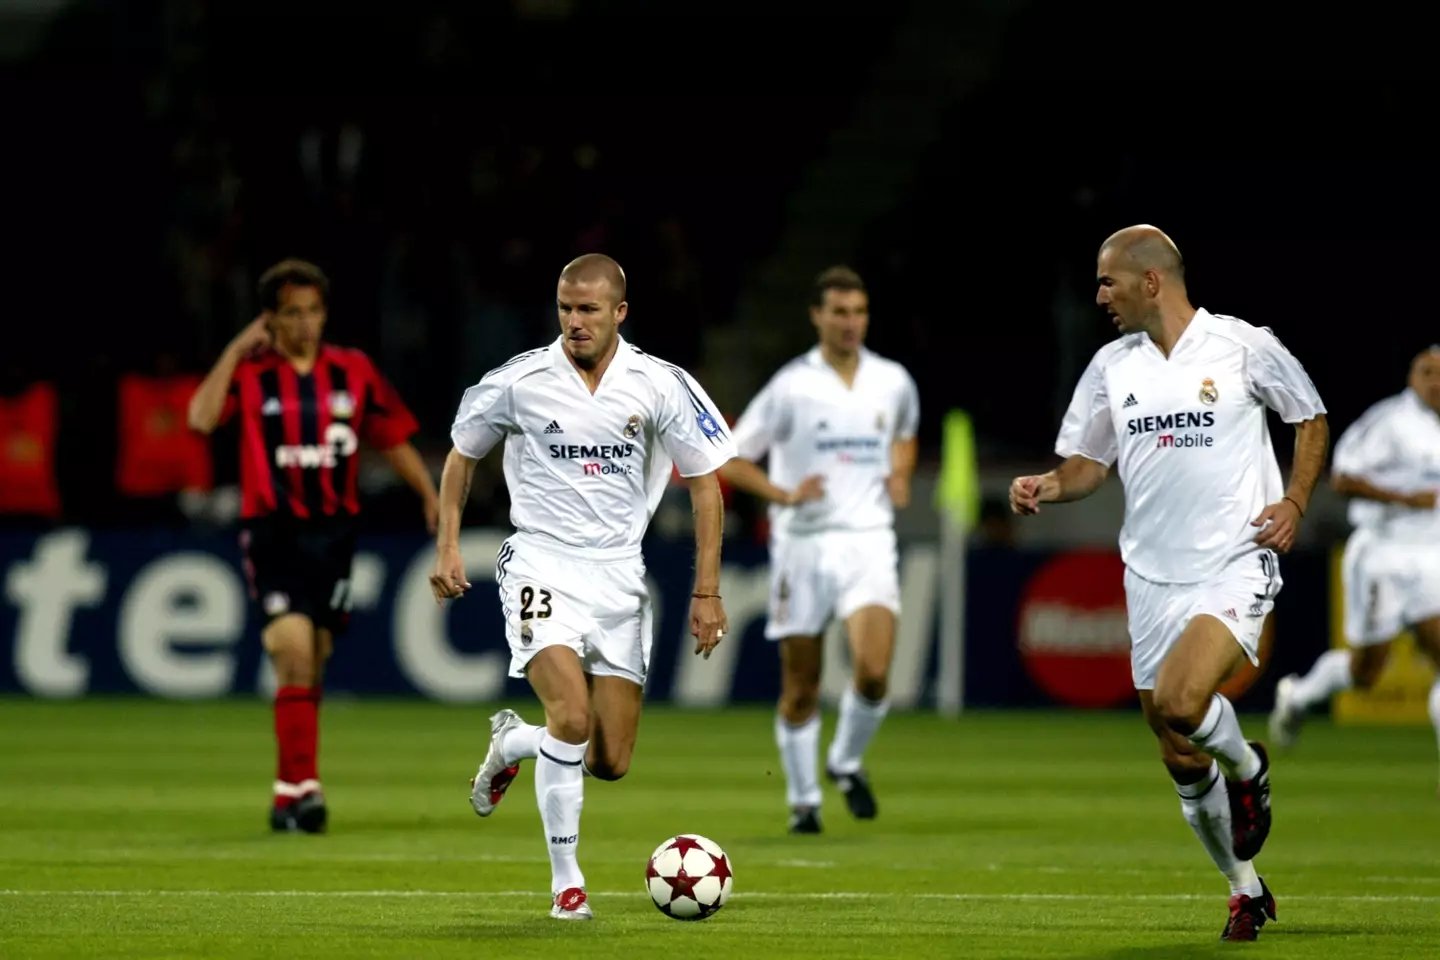 David Beckham and Zinedine Zidane in action for Real Madrid. Image